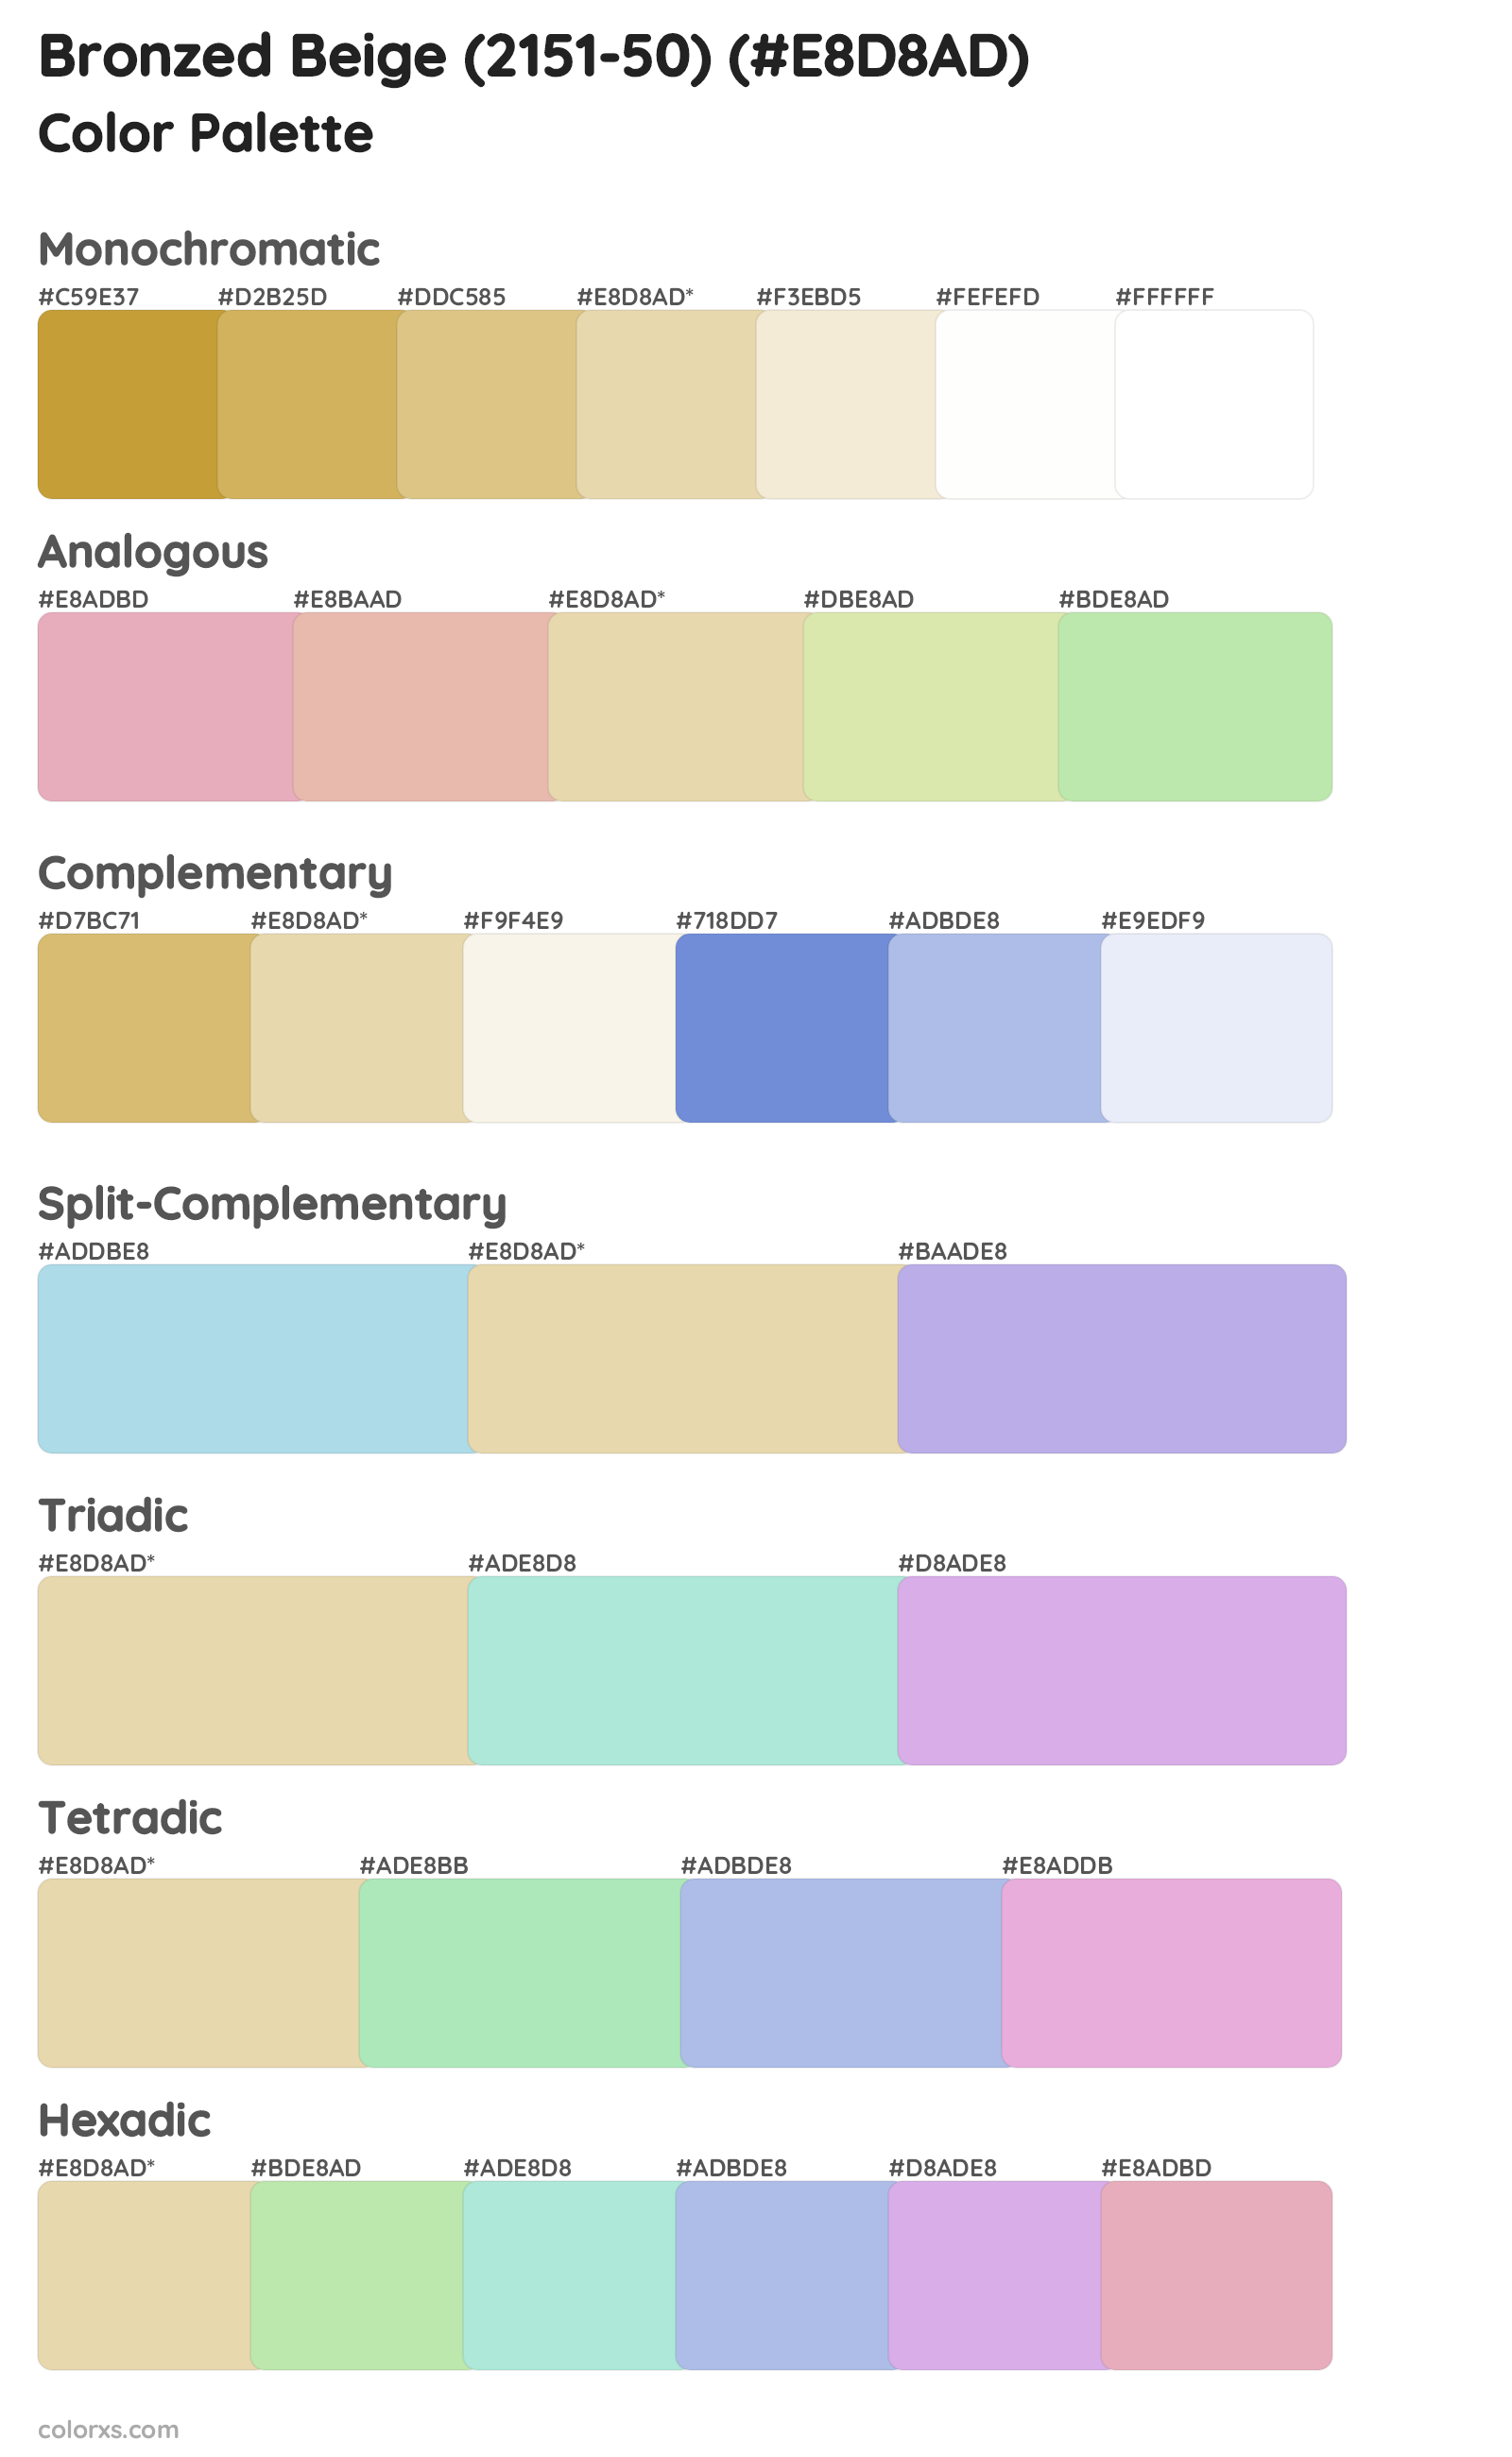 Bronzed Beige (2151-50) Color Scheme Palettes